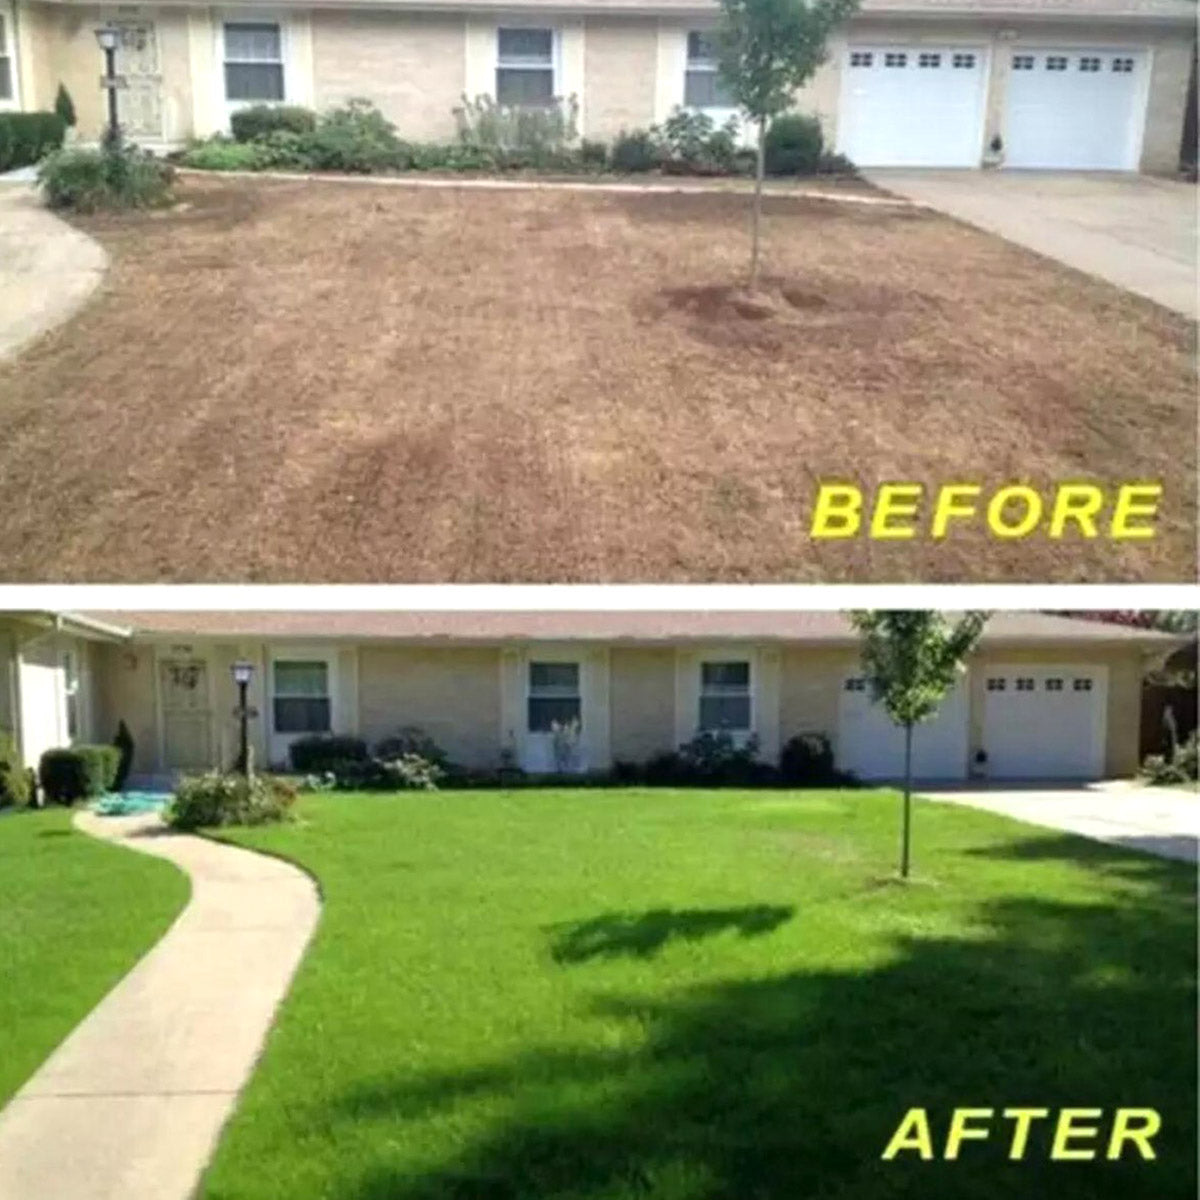 <tc>Ariko</tc> Grass seed roll - 10mx0.20m - Grass repair - Grass construction - Grass repair - Very easy to use - Organic grass - Grass roll